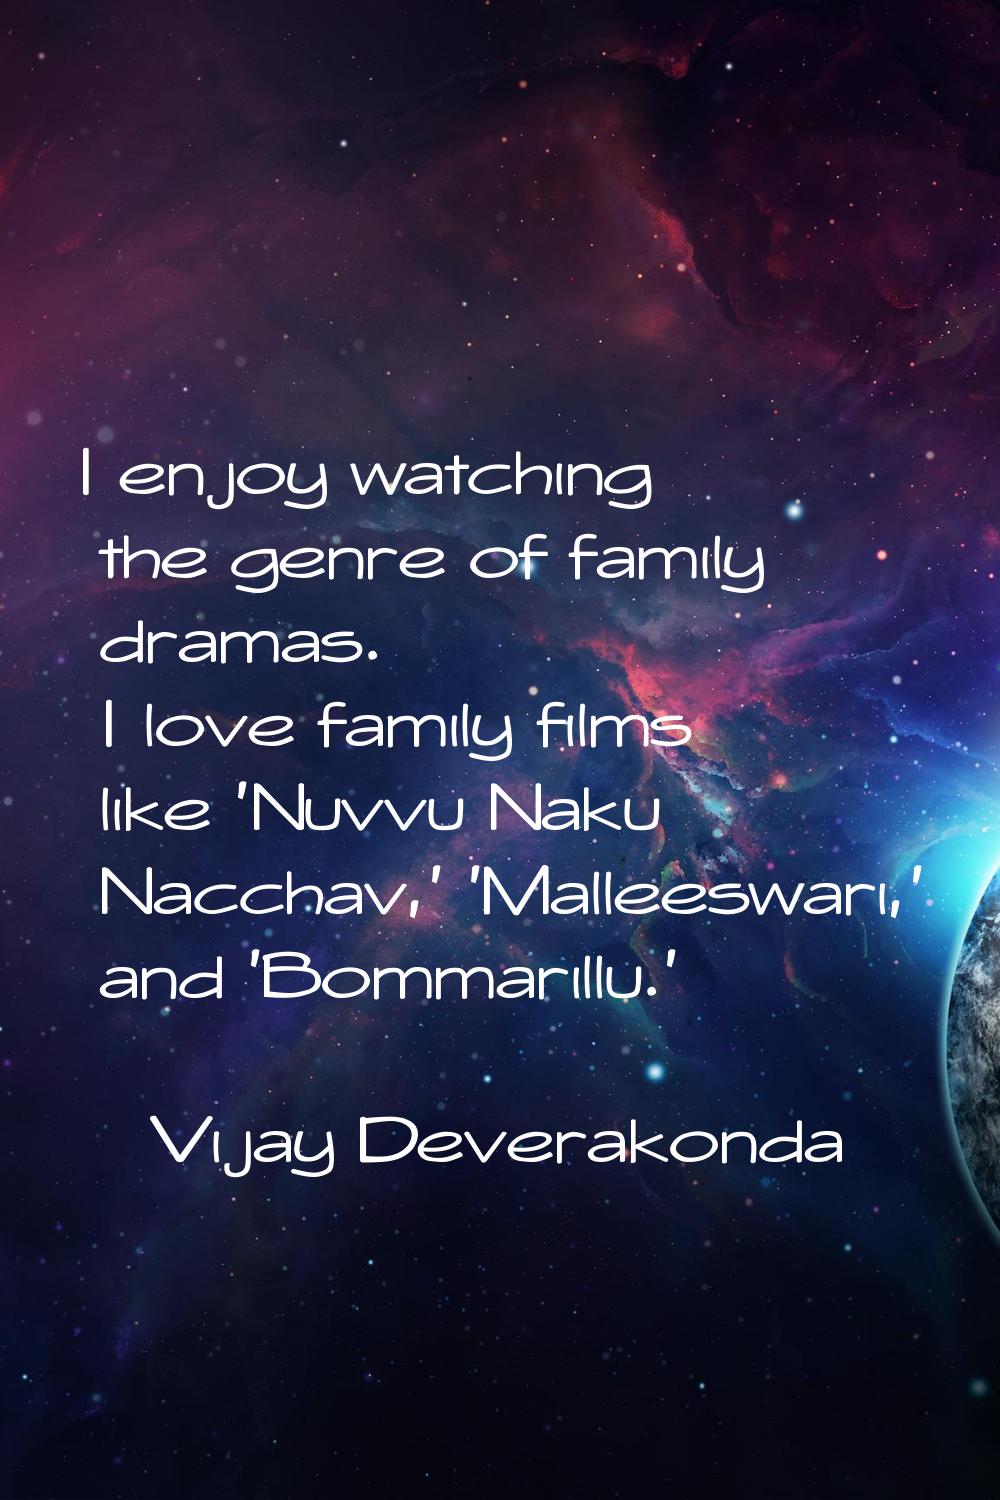 I enjoy watching the genre of family dramas. I love family films like 'Nuvvu Naku Nacchav,' 'Mallee